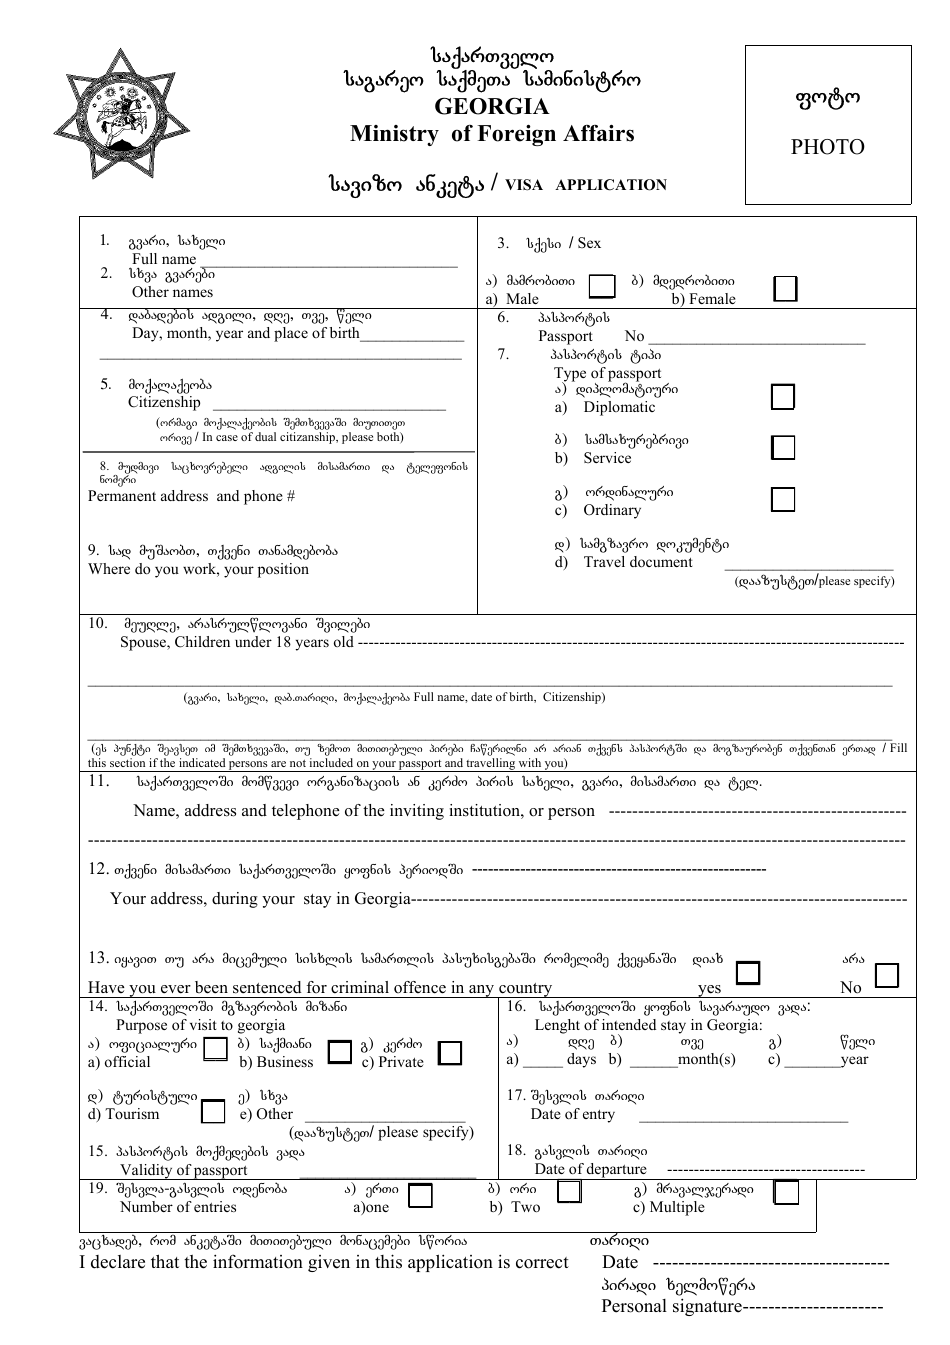 Georgia Visa Application Form - Georgia Ministry of Foreign Affairs, Page 1